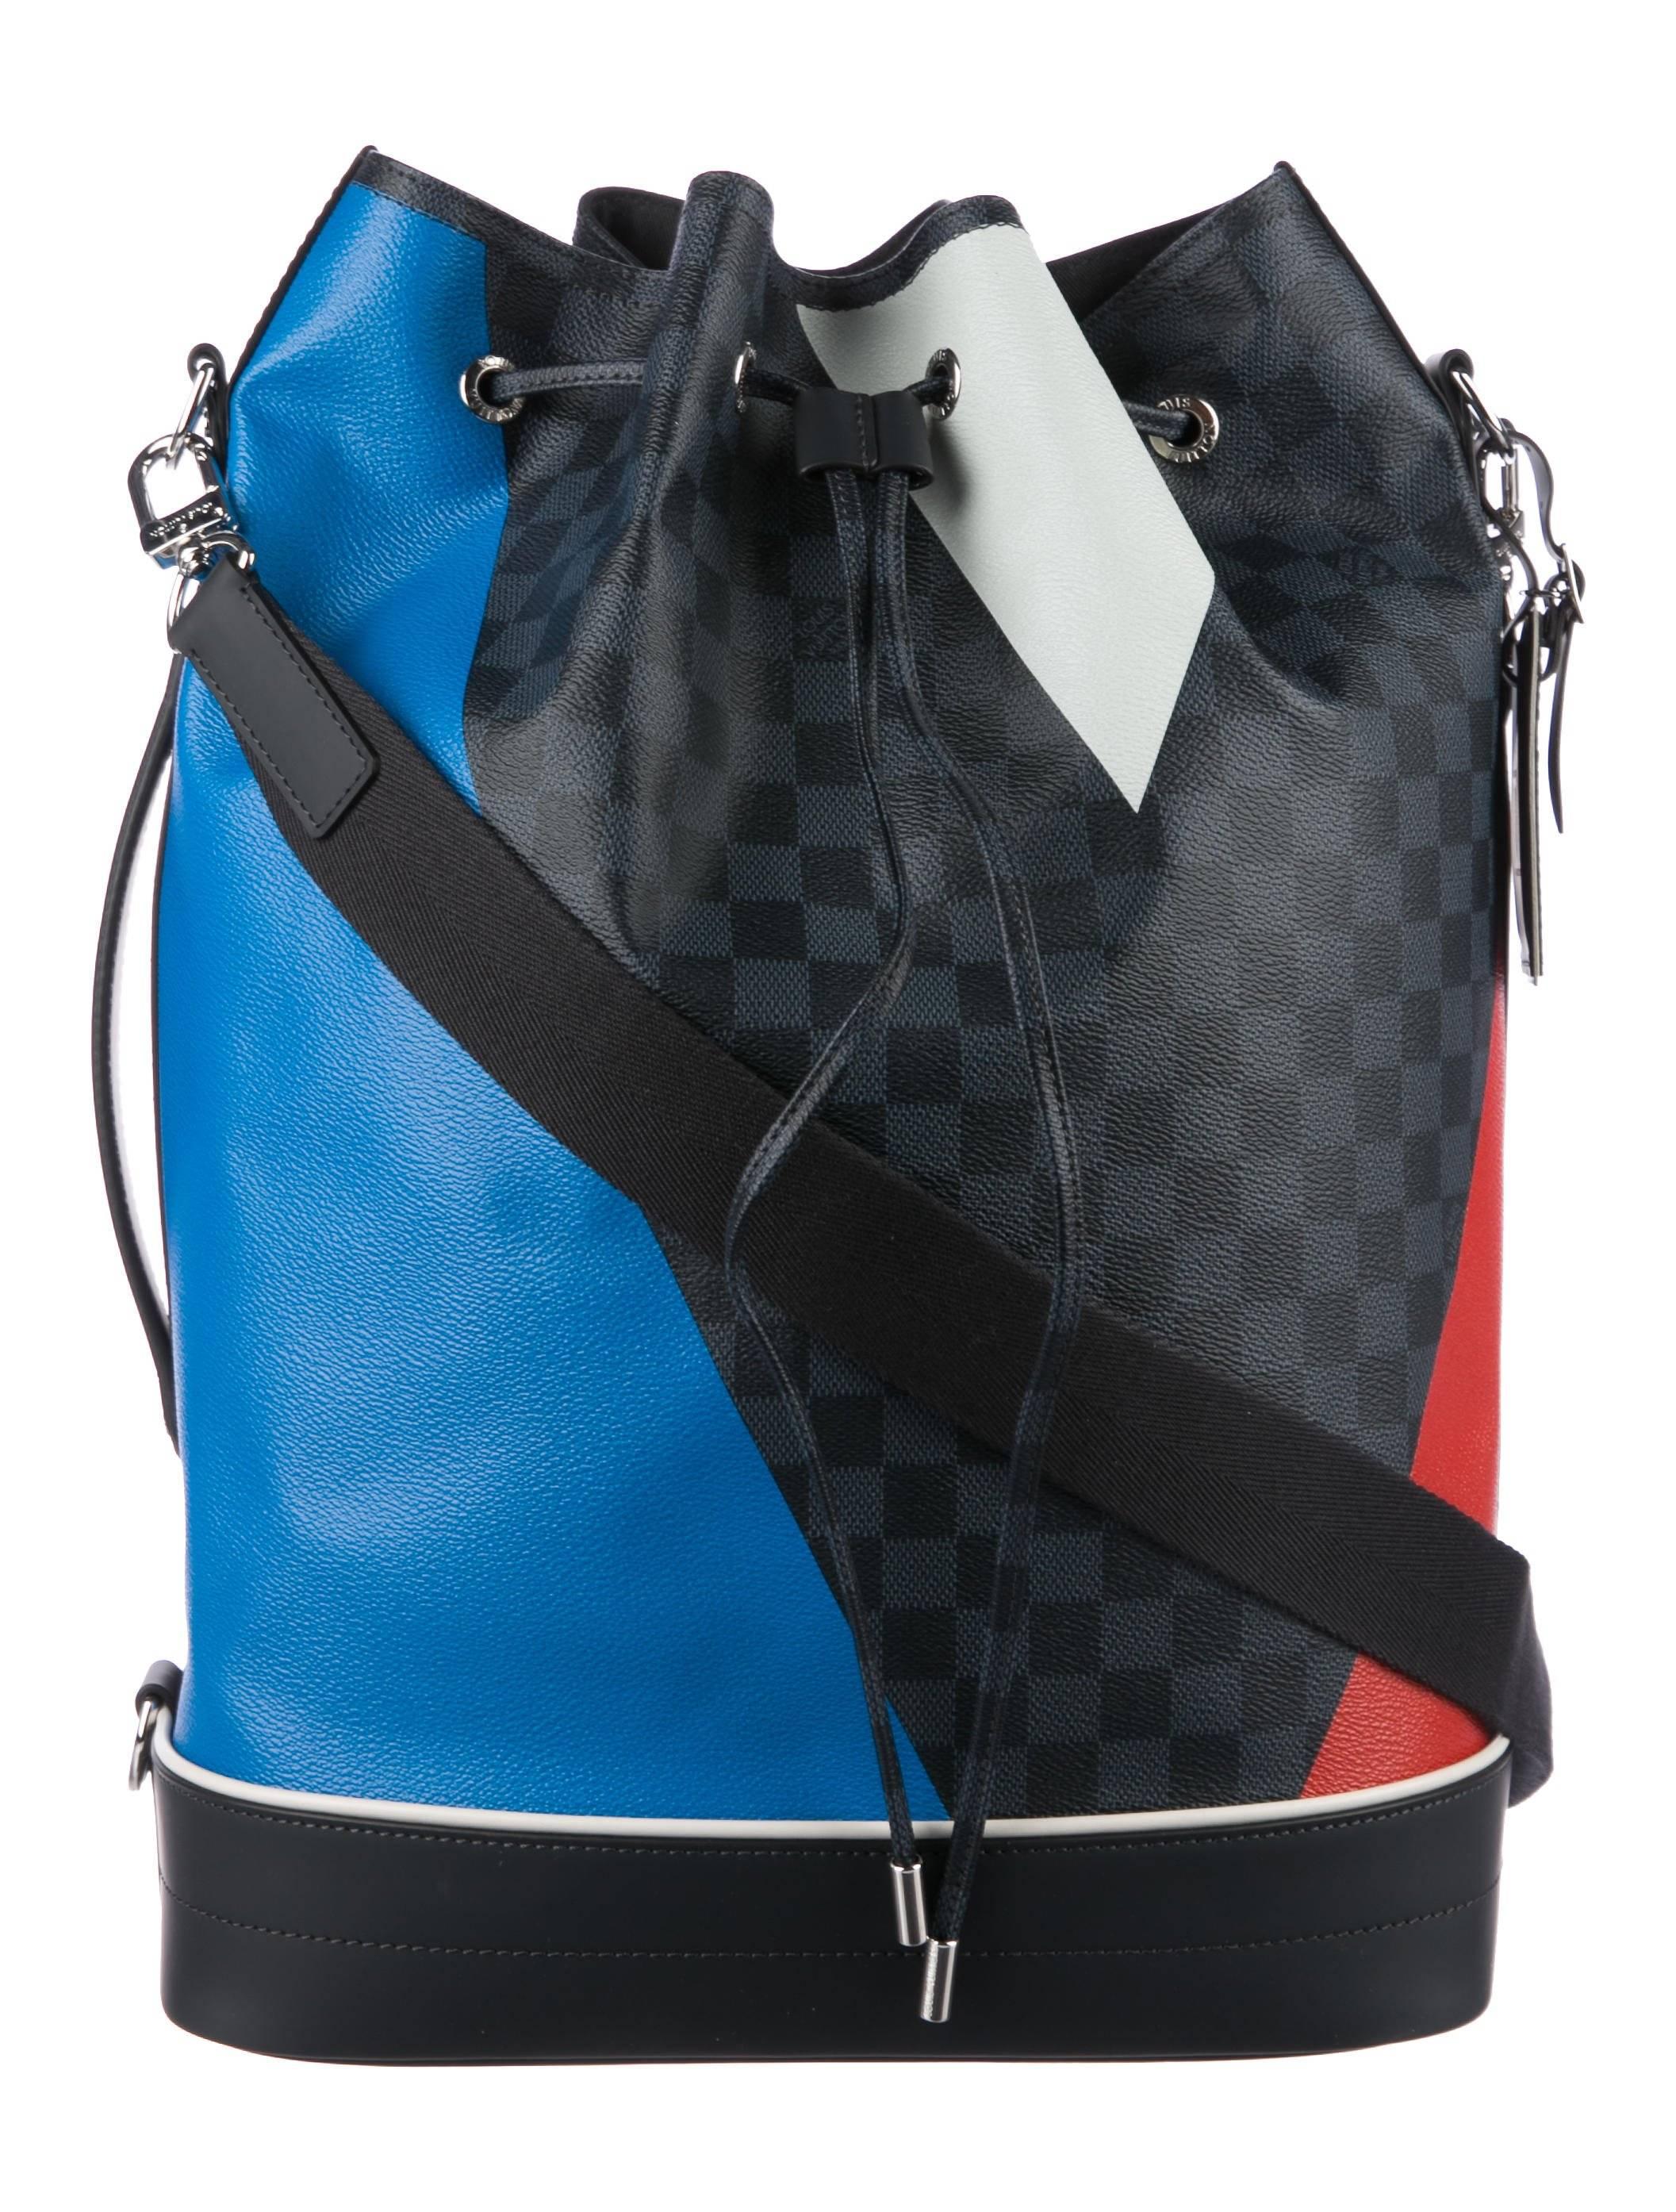 Black Louis Vuitton New Stripe Bucket CarryAll Travel Duffle Shoulder Bag in Box